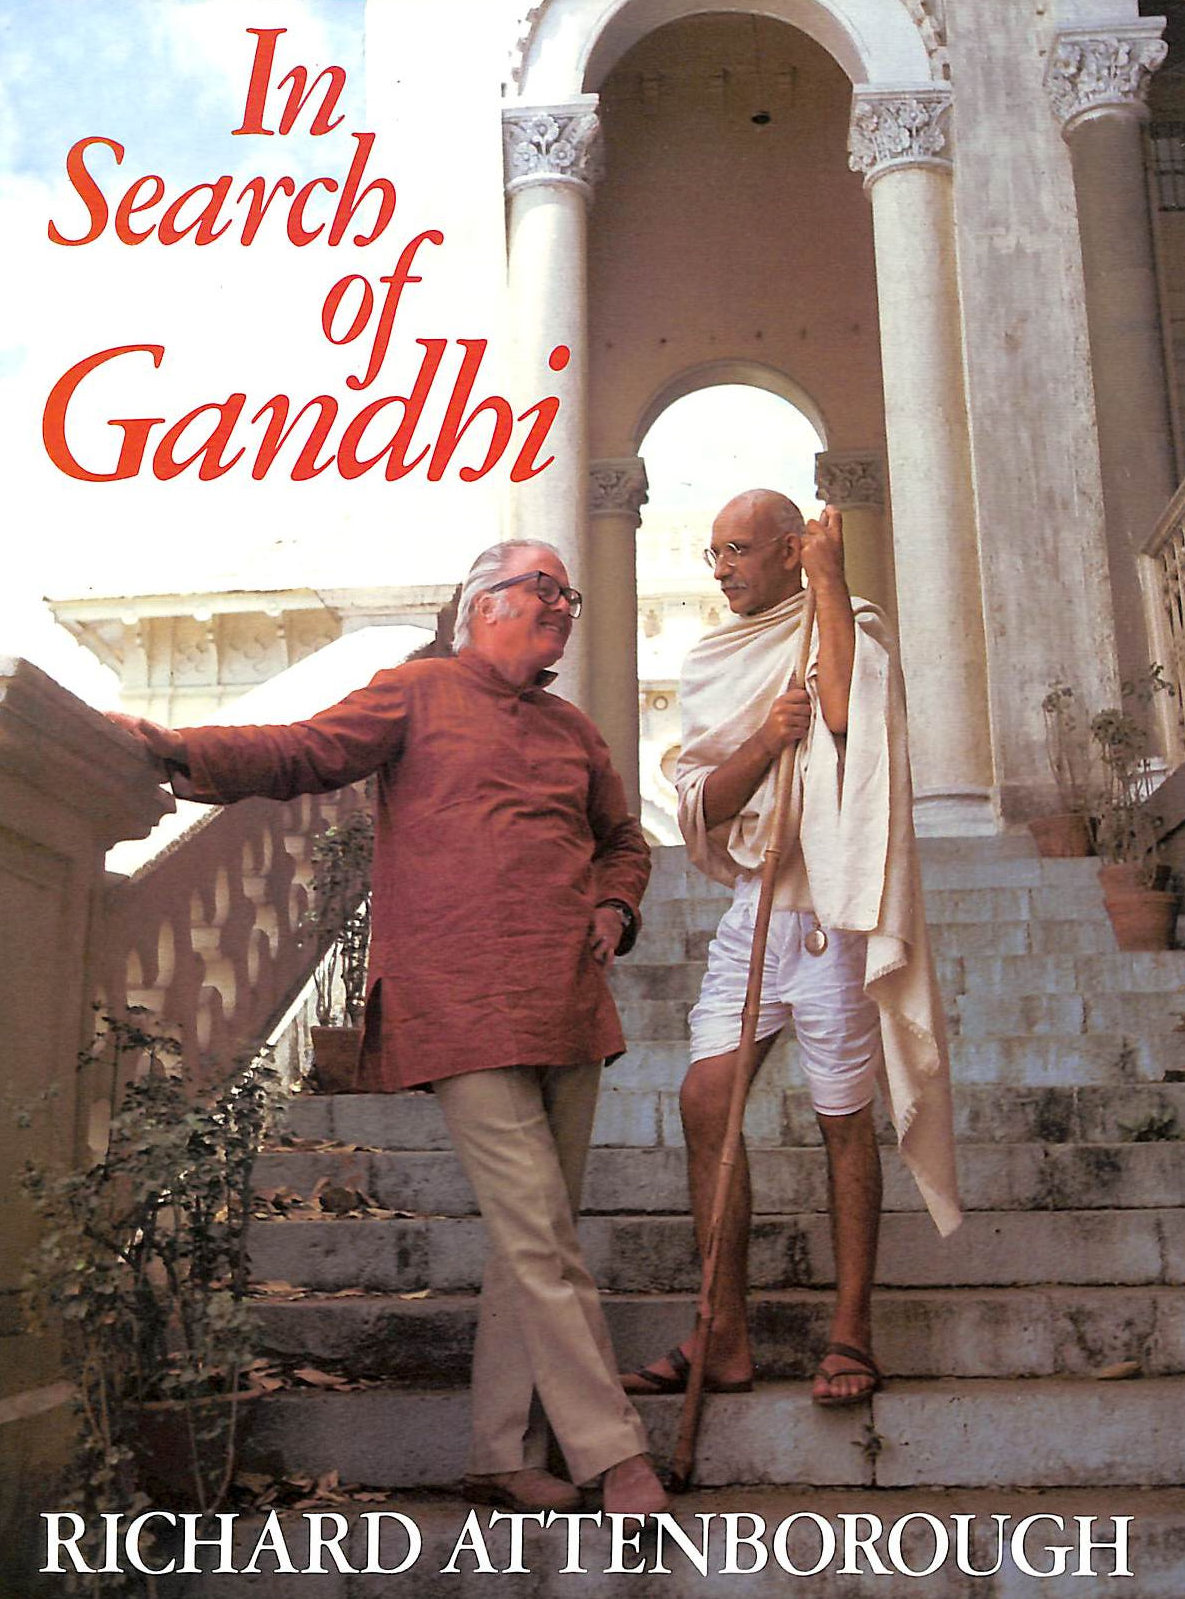 ATTENBOROUGH, RICHARD - In Search Of Gandhi